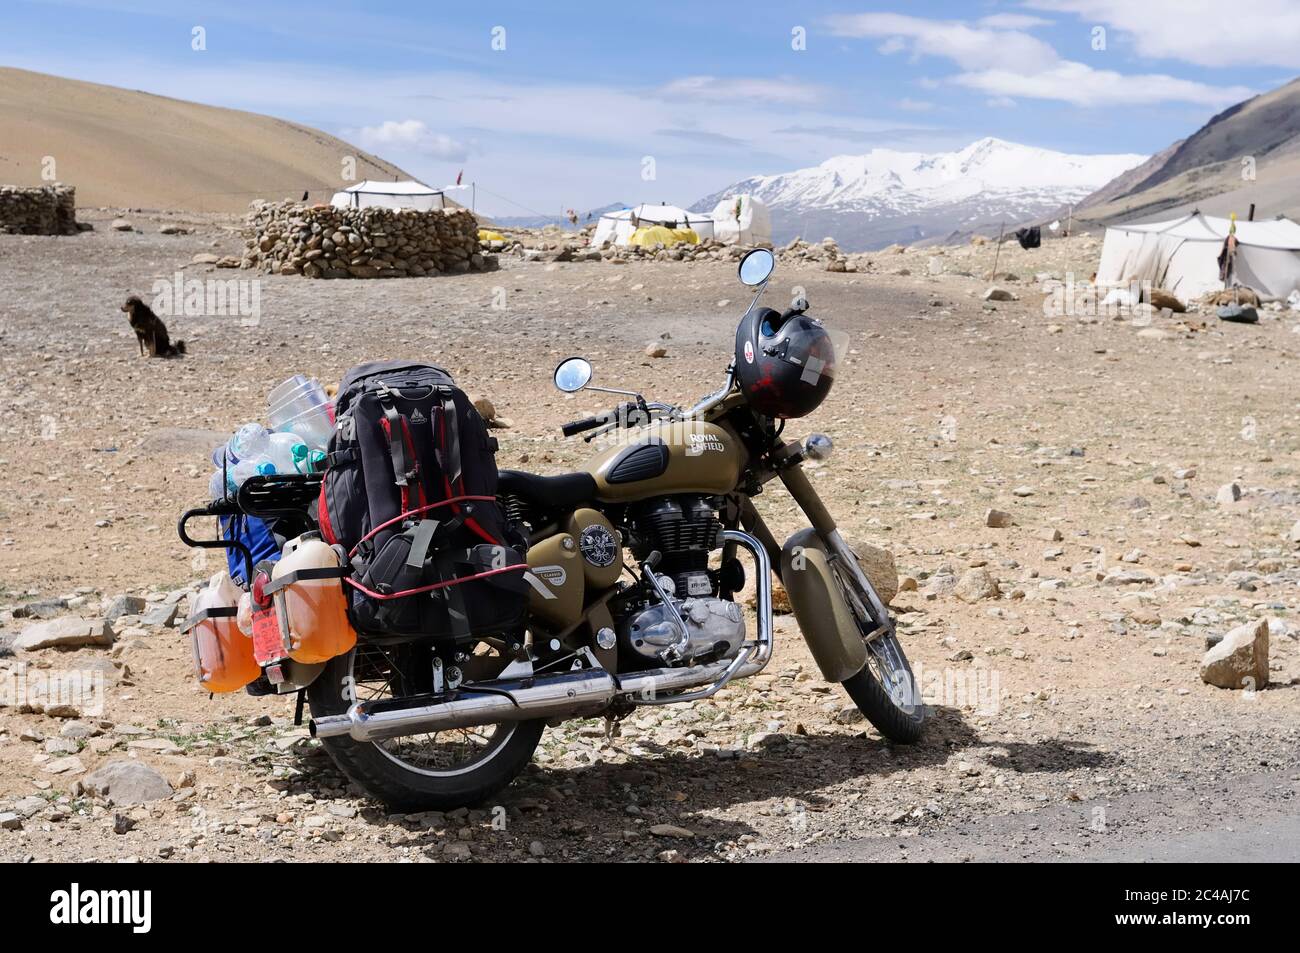 TSO MORIRI, INDIA - JULY 05 Royal Enfield motorcycles is parking beside changpa nomad camps, Ladakh, Leh District on Juli 05, 2017 Stock Photo